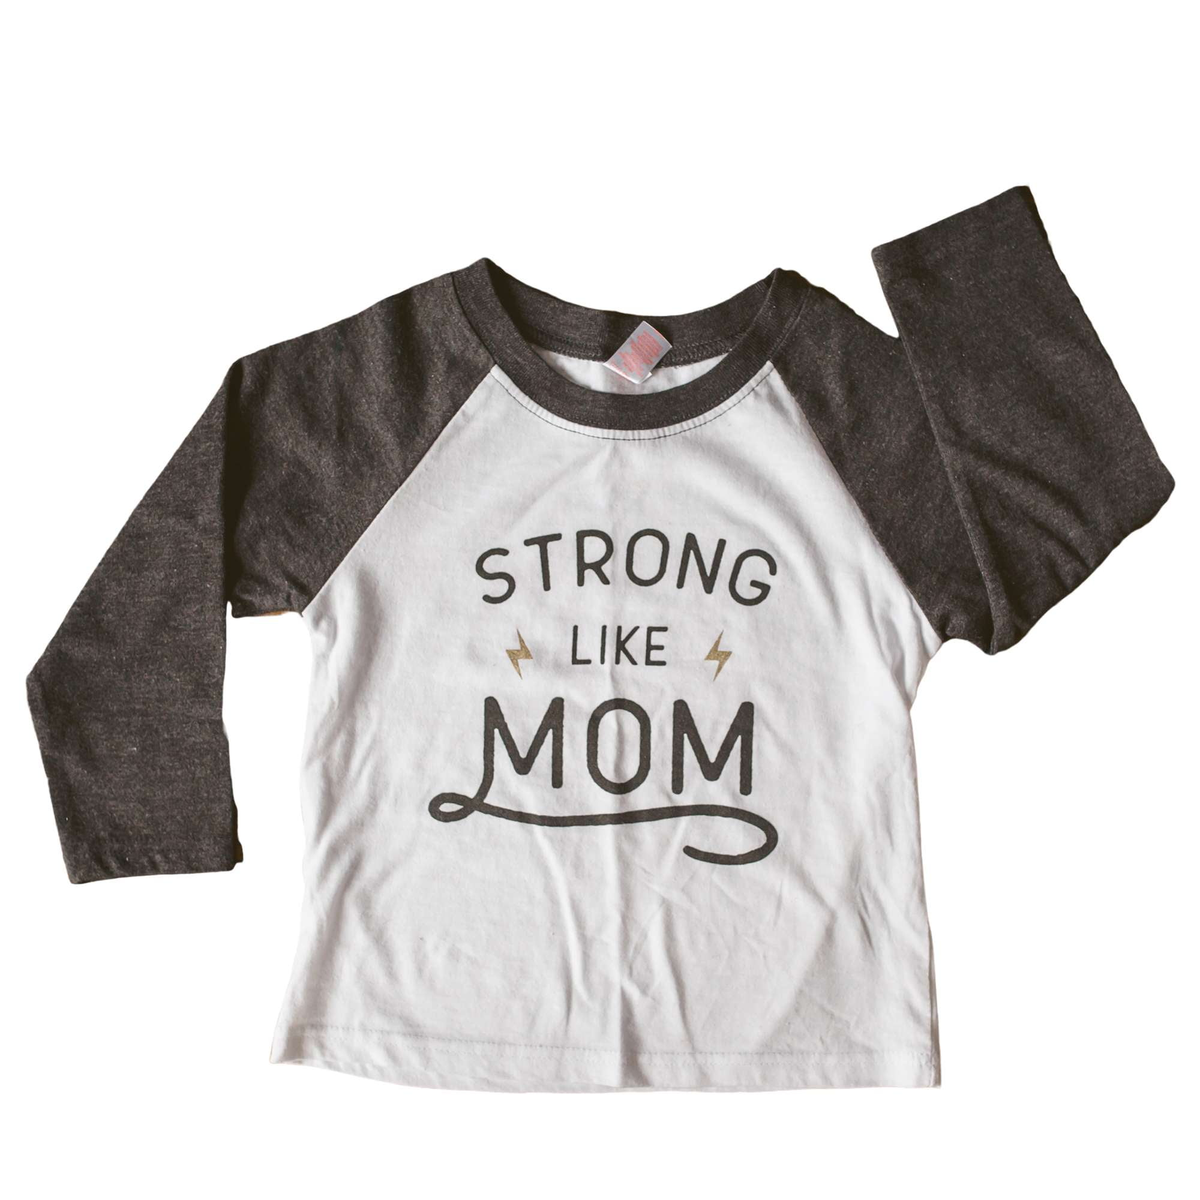 Strong Like Mom Raglan Tee - Sweetpea and Co.